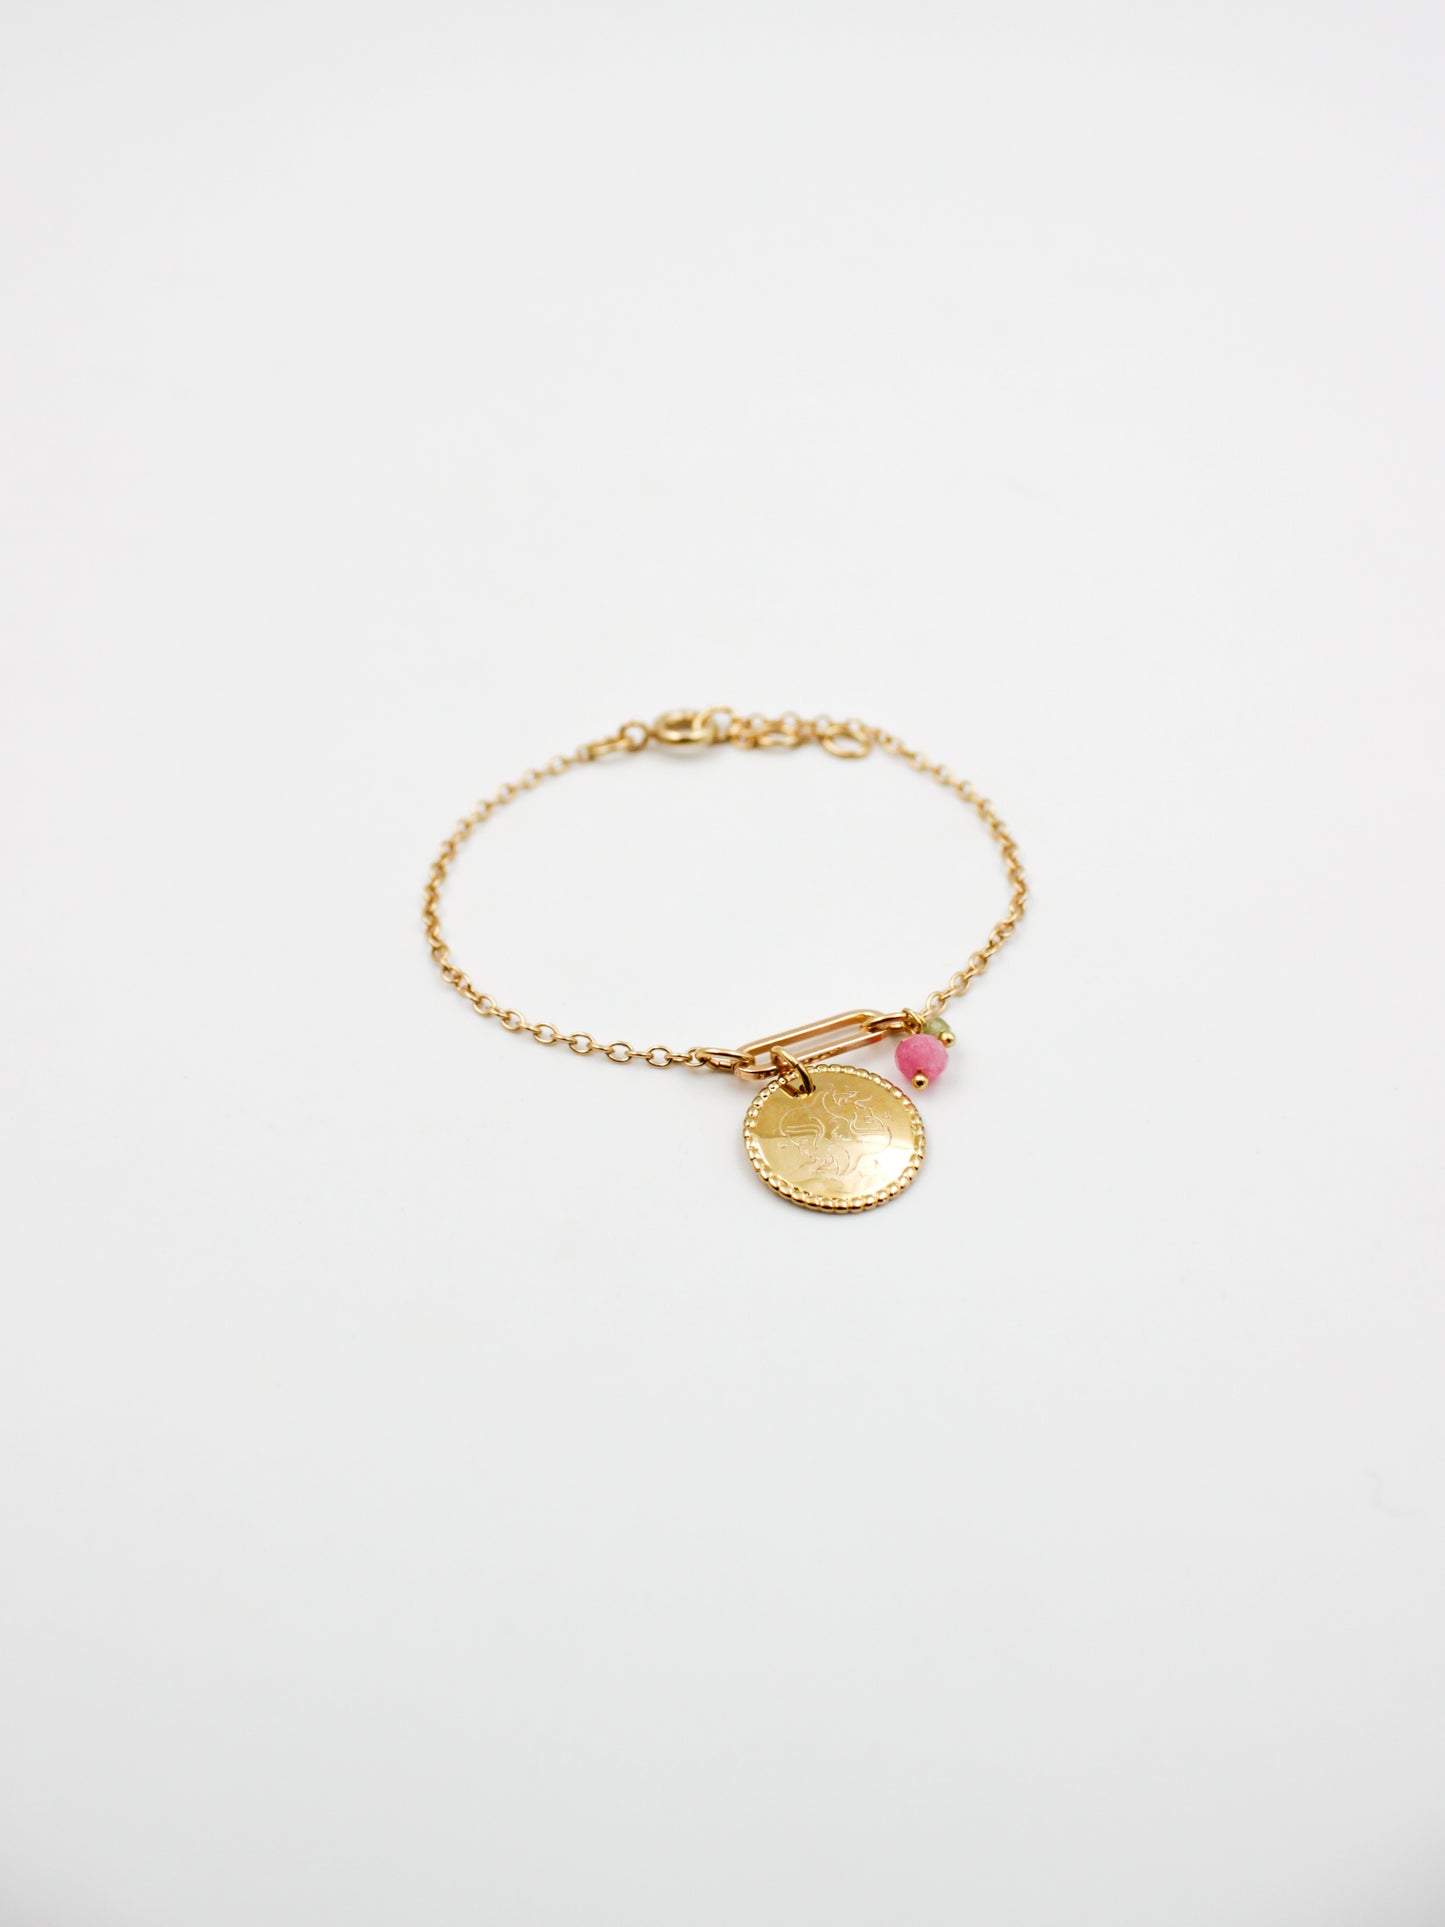 Astro Bracelet - Gold Plated - Gemini